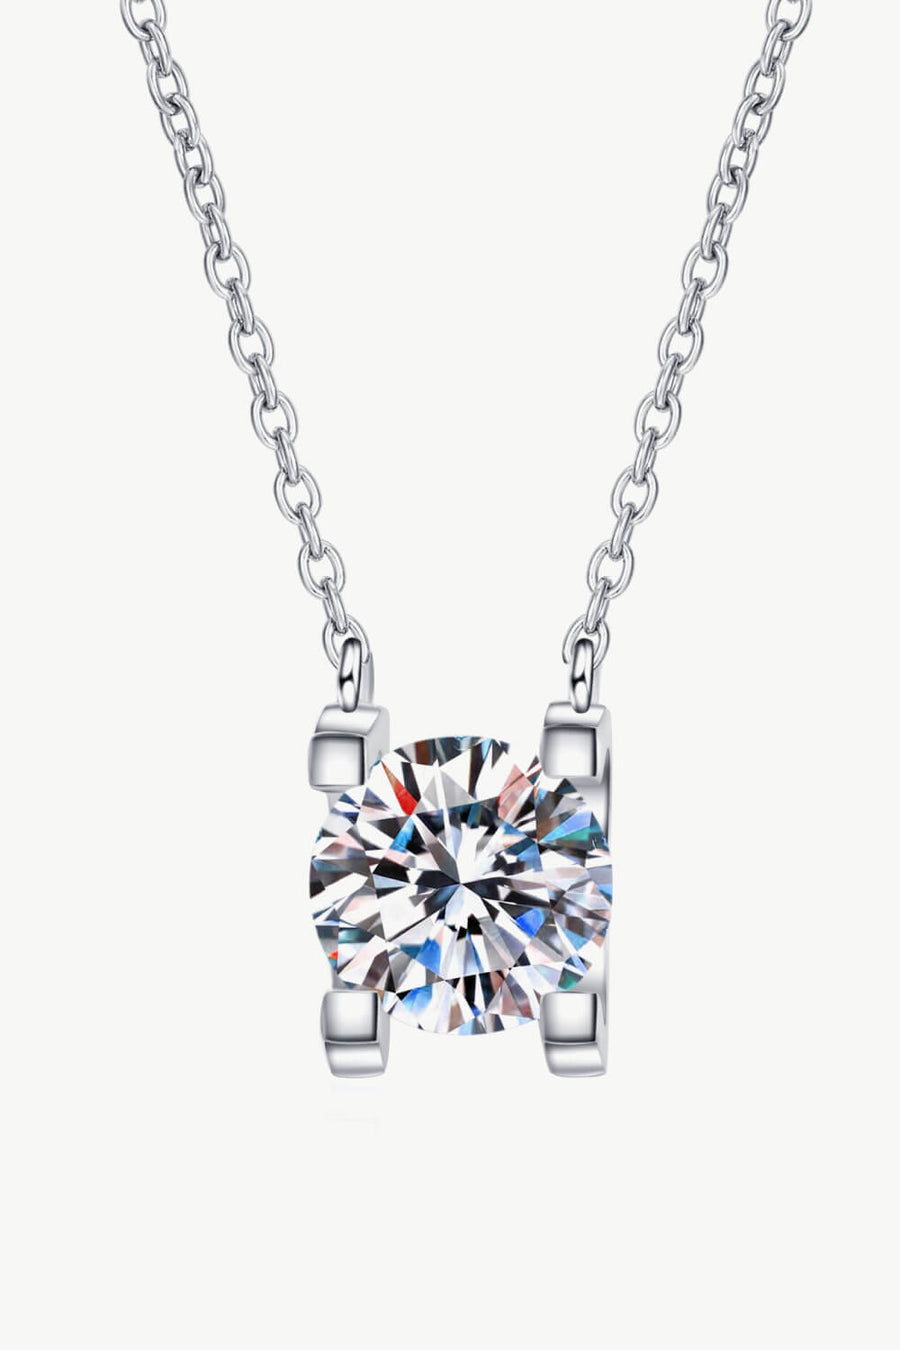 Best Diamond Necklace Jewelry Gifts for Women | 1 Carat Round Diamond Chain Necklace | MASON New York